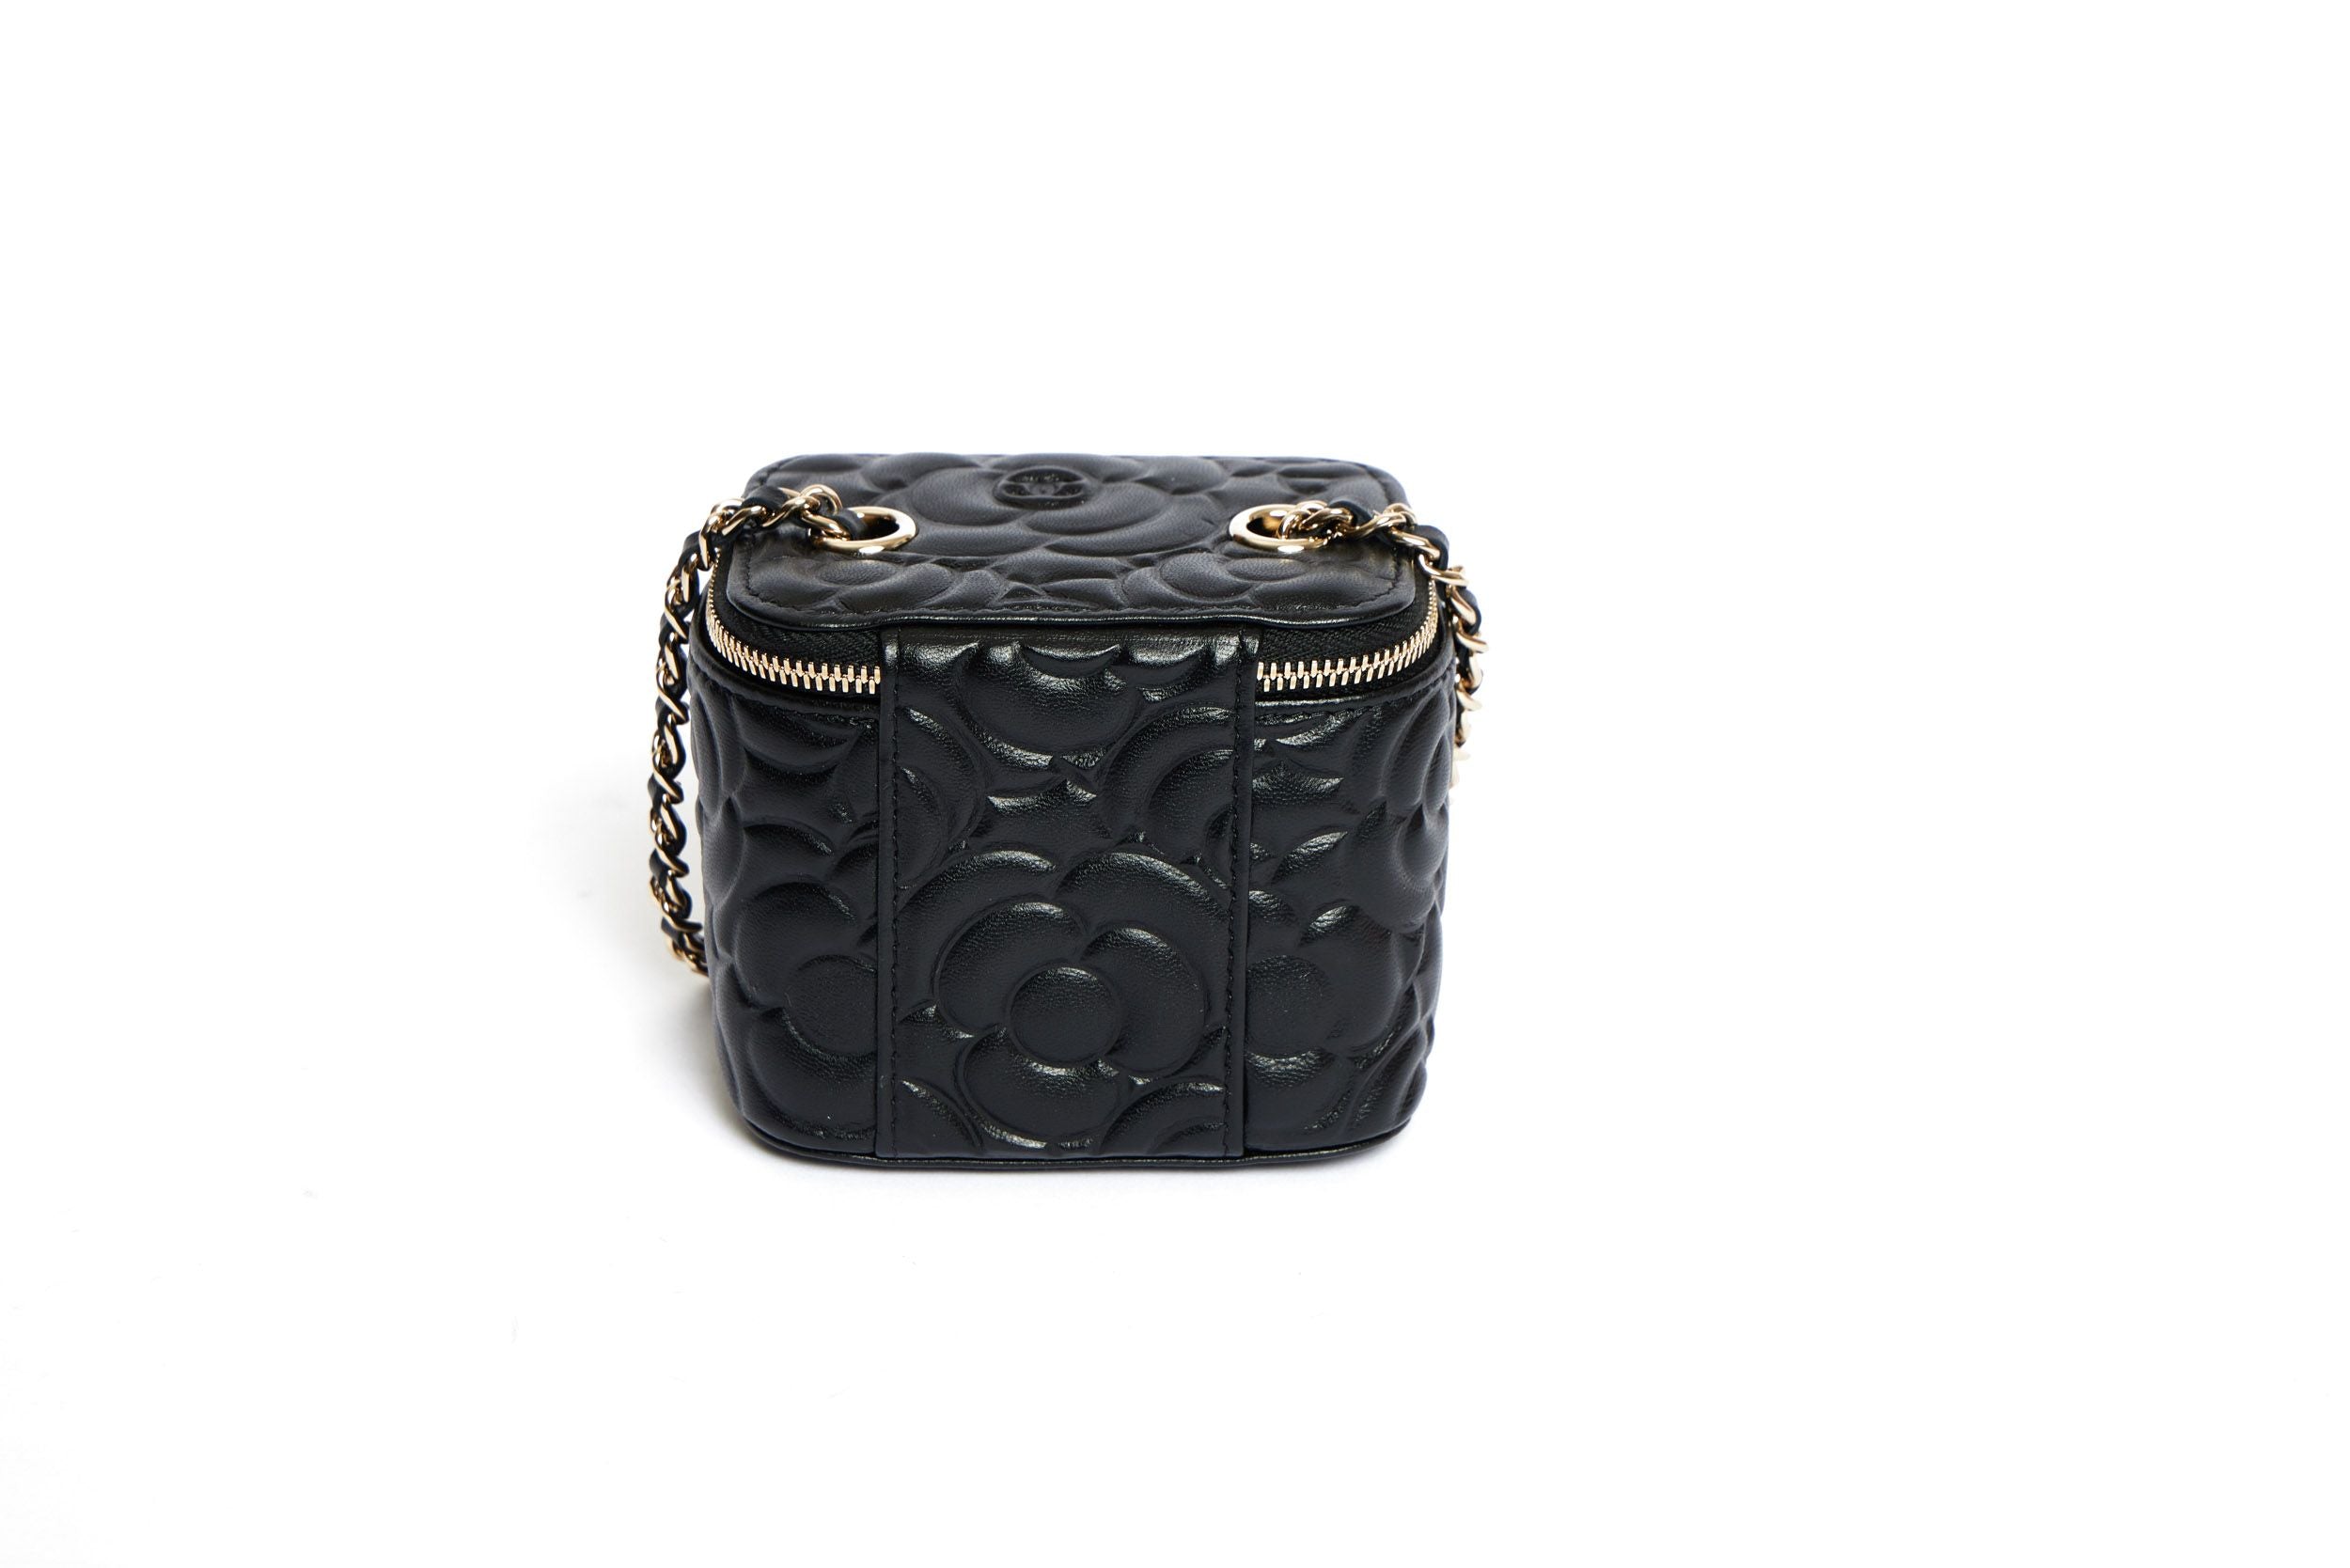 Chanel Cc Caviar Leather Vanity Bag